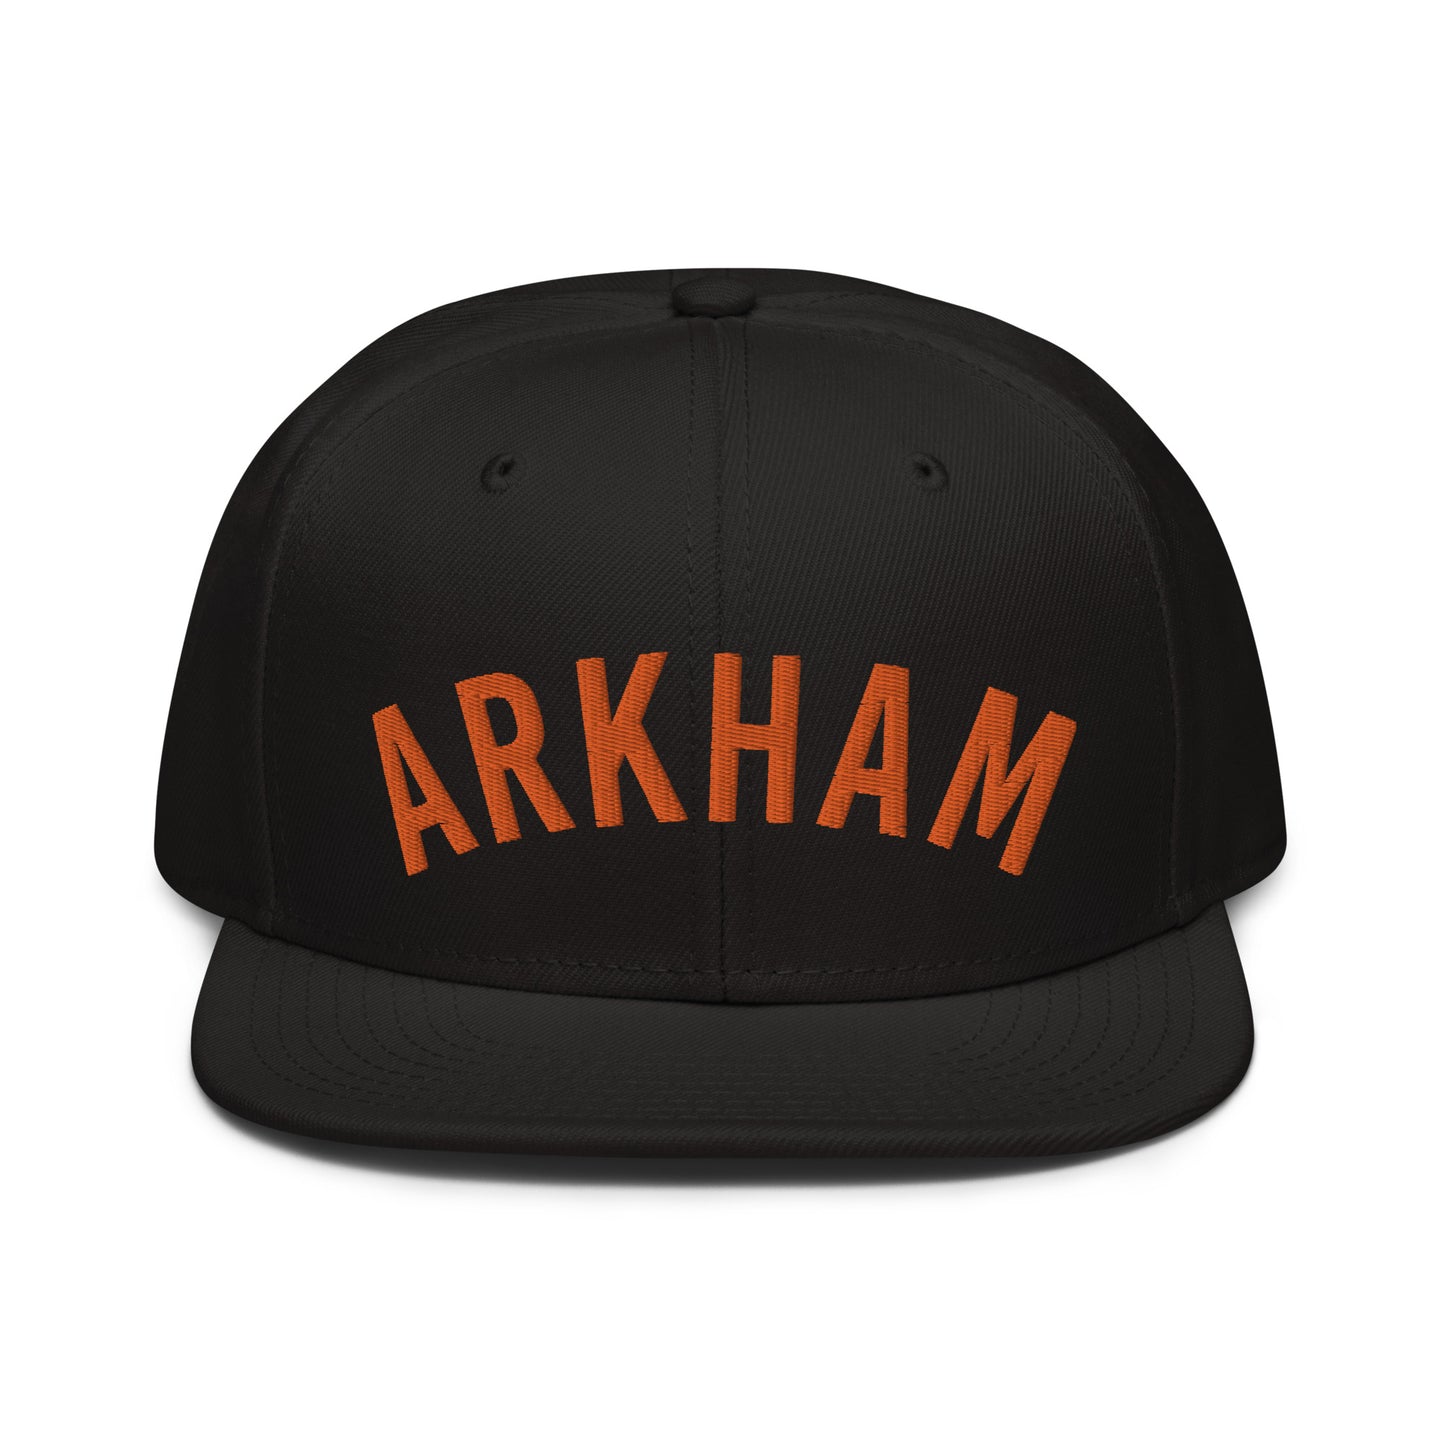 Arkham Home Team snapback hat